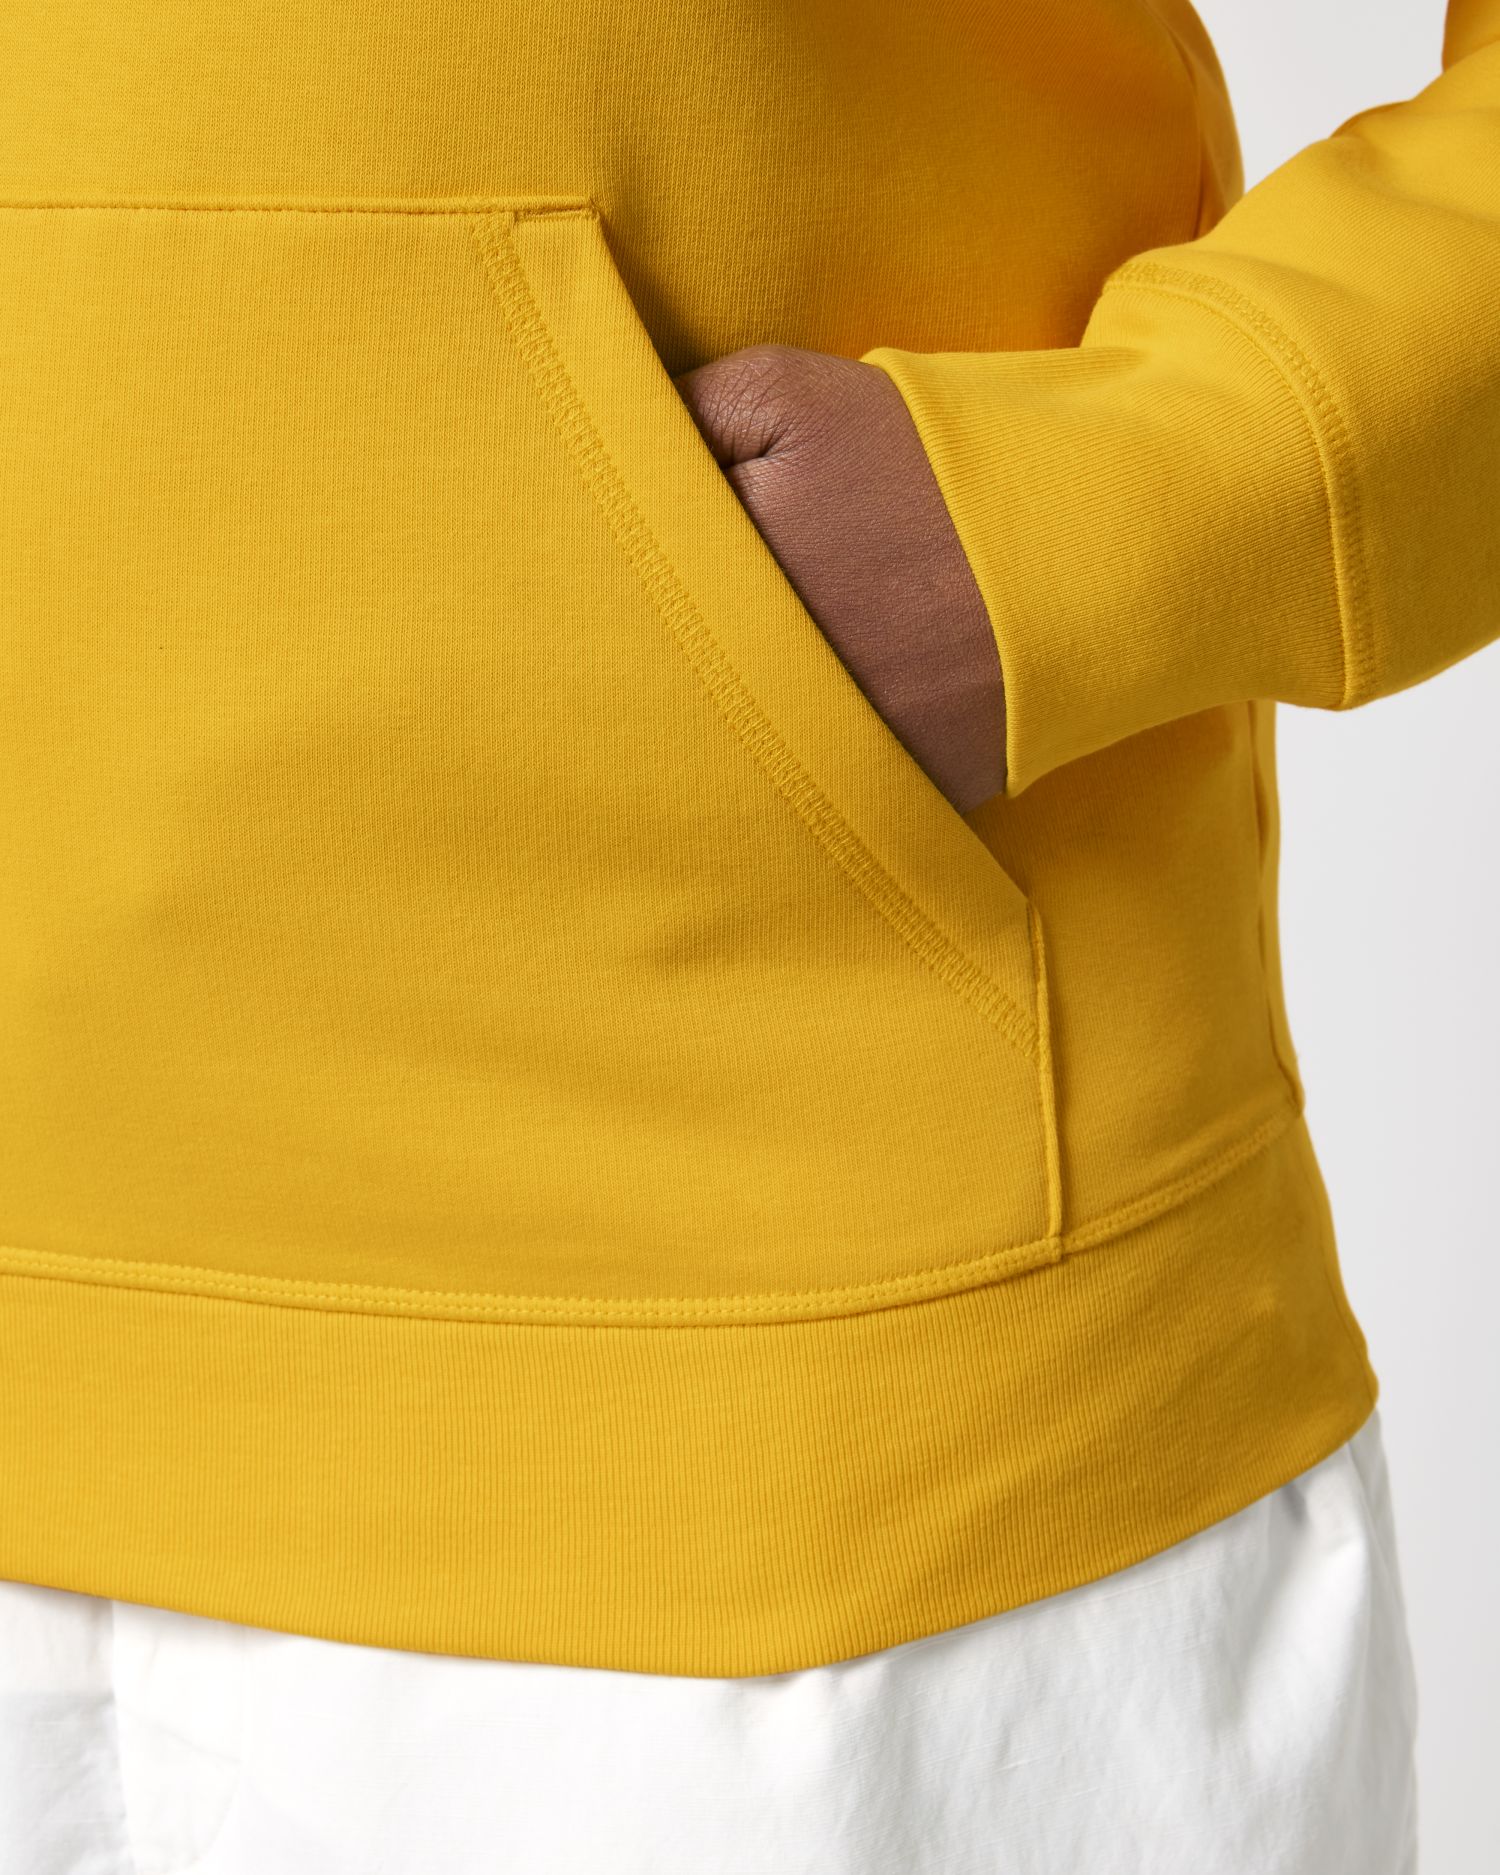 Hoodie sweatshirts Drummer 2.0 in Farbe Spectra Yellow